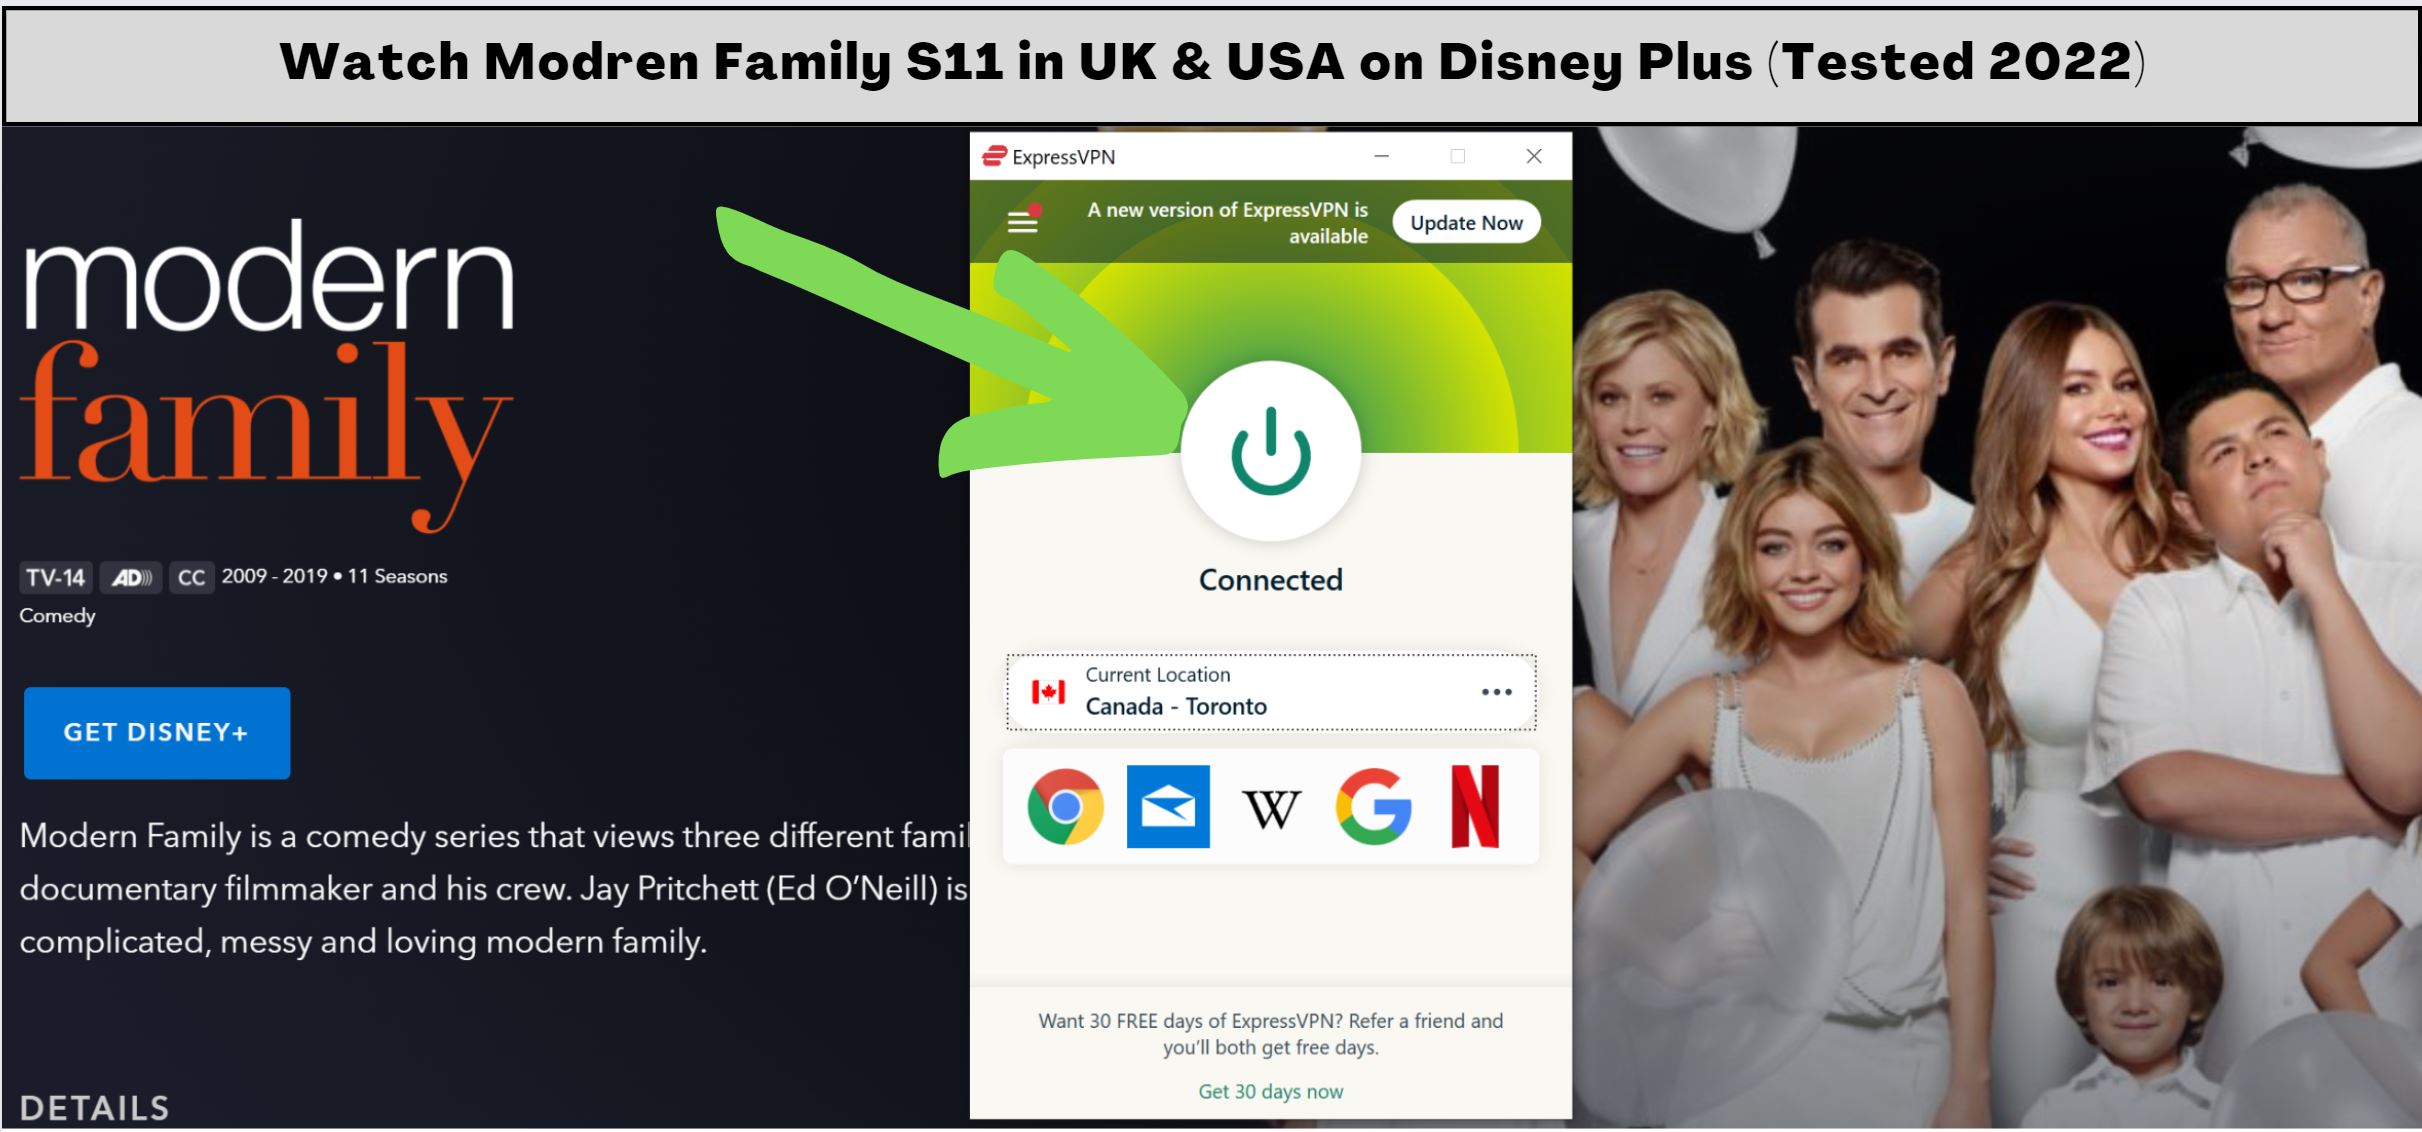 Watch Modern Family Season 11 on Disney+ in the UK & USA